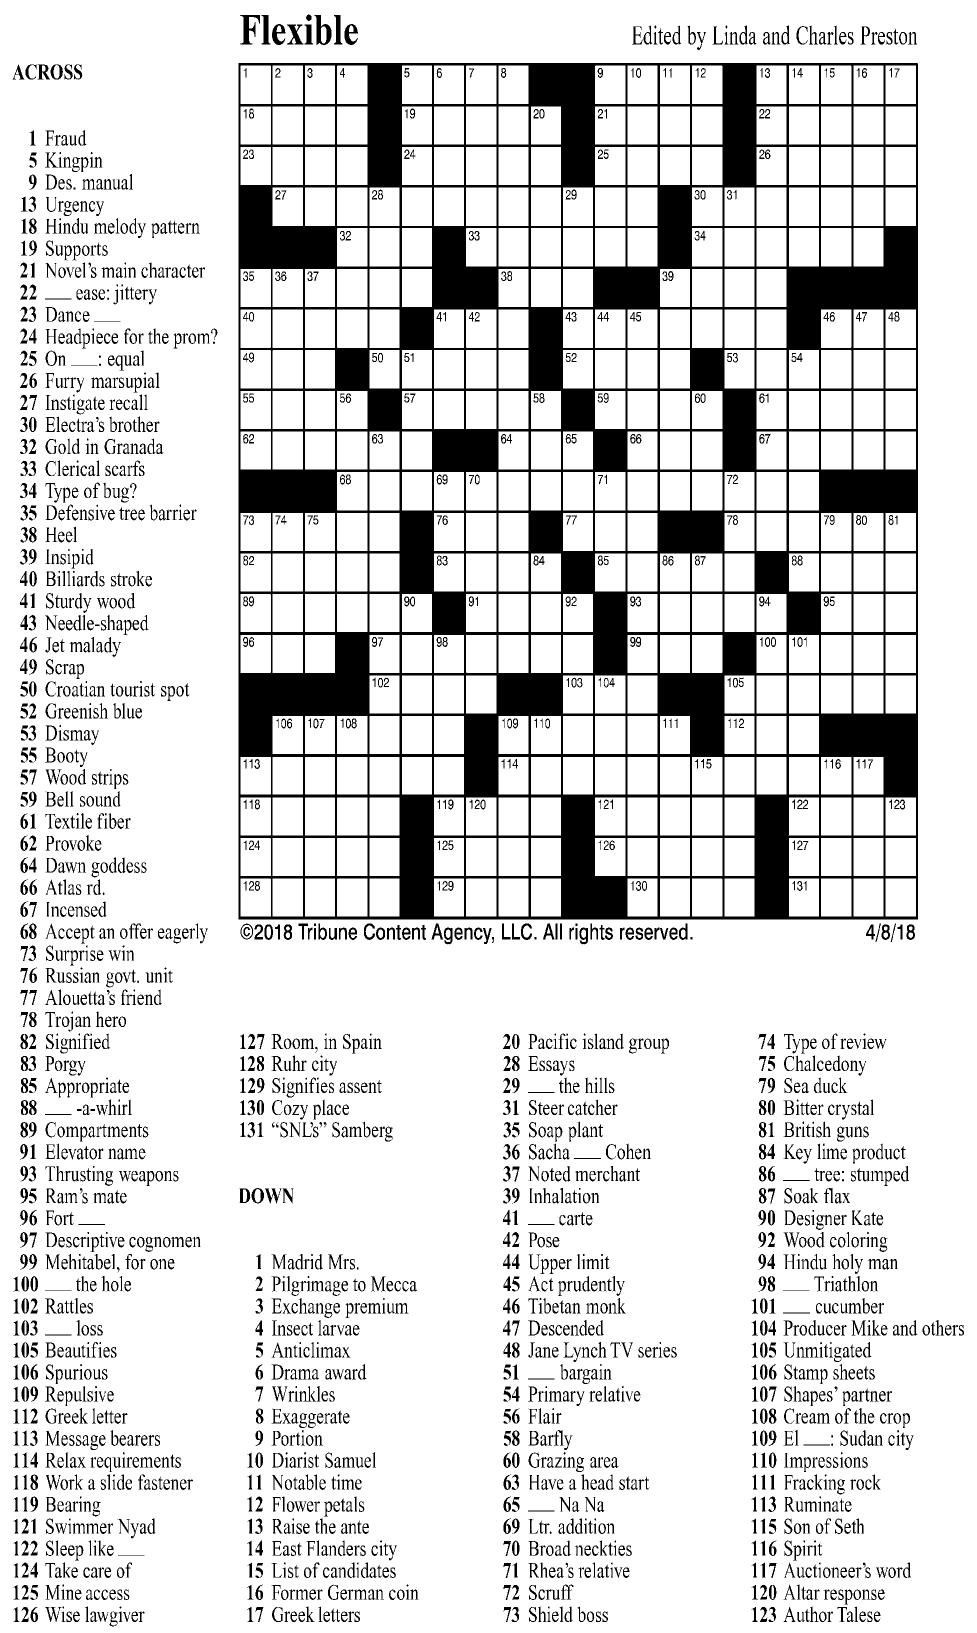 Printable Joseph Conrad Crossword Puzzle